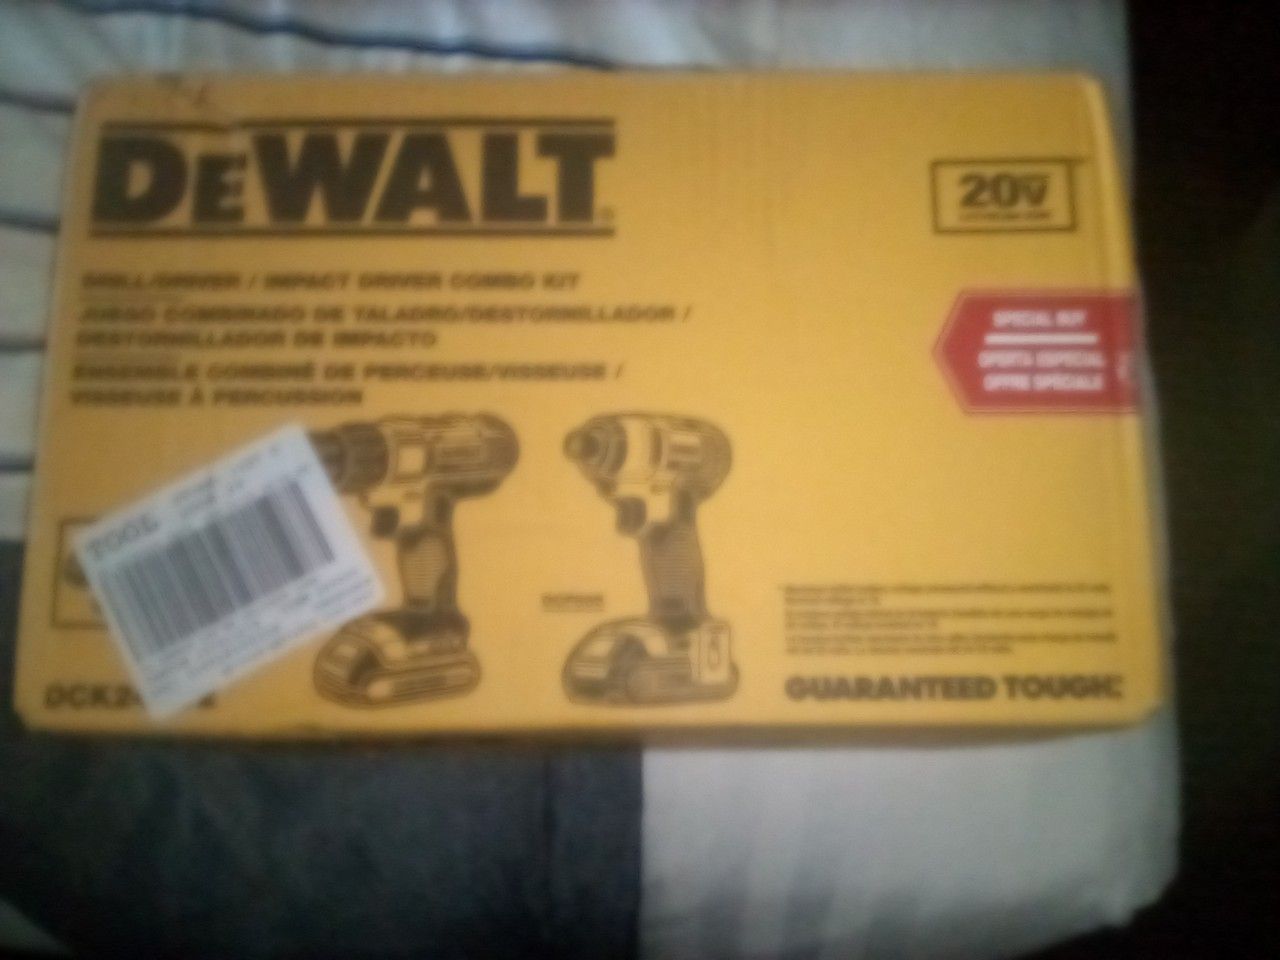 DeWalt drill set 20 volt impack drive and drill